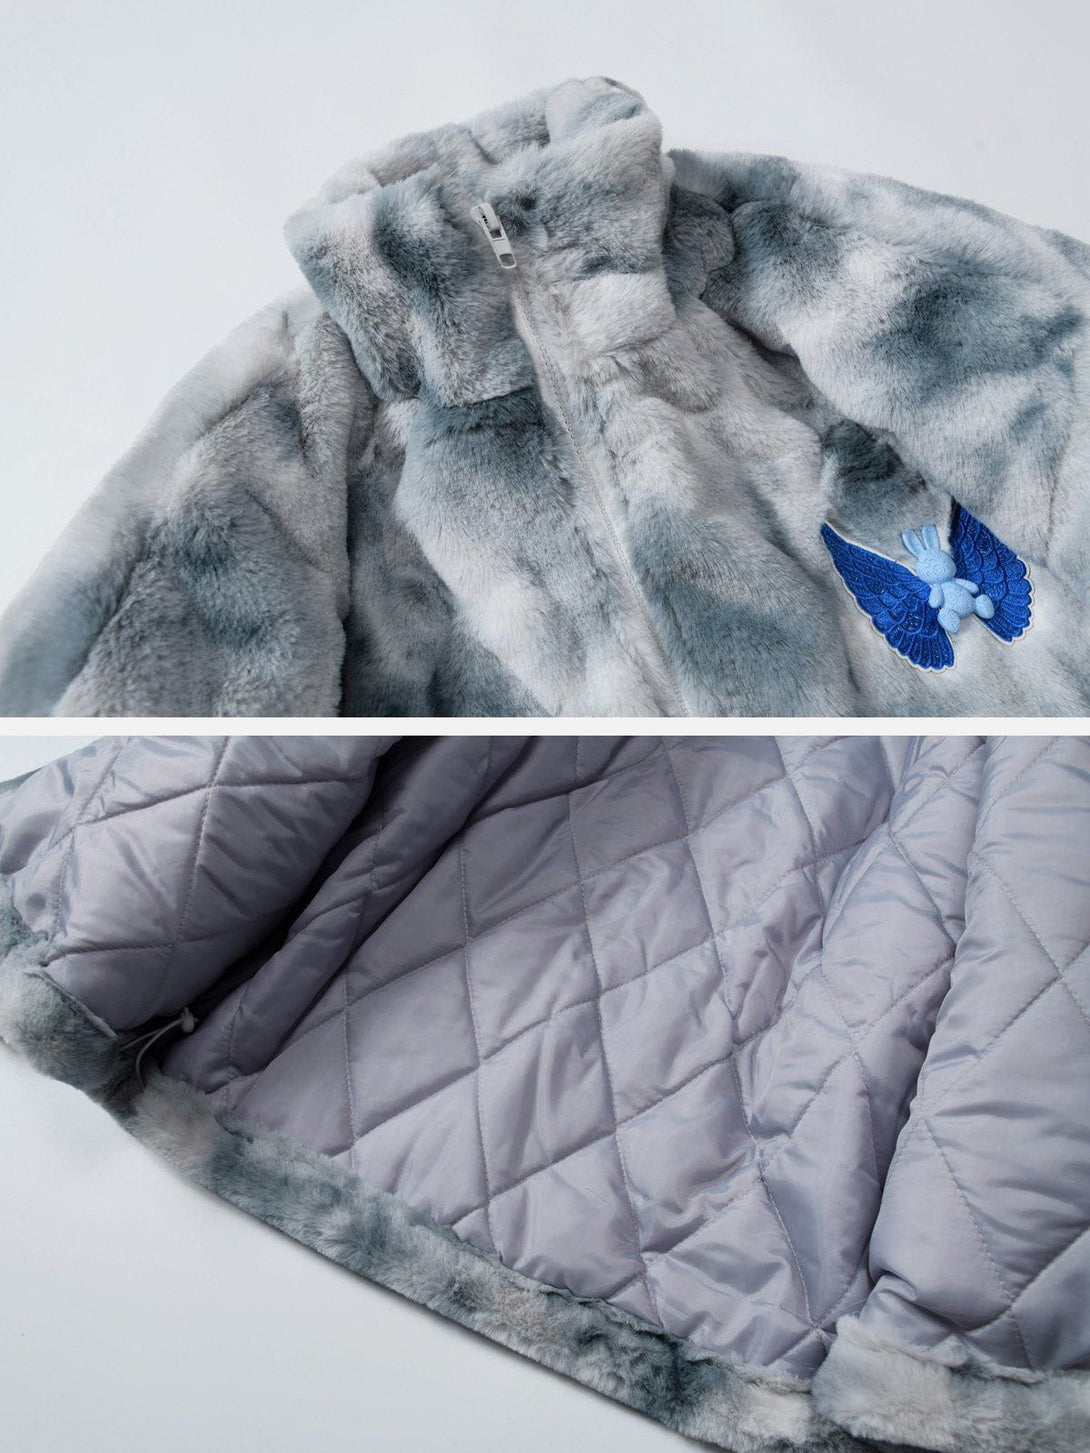 AlanBalen® - Embroidered Wings Bunny Label Tie Dye Sherpa Coat AlanBalen